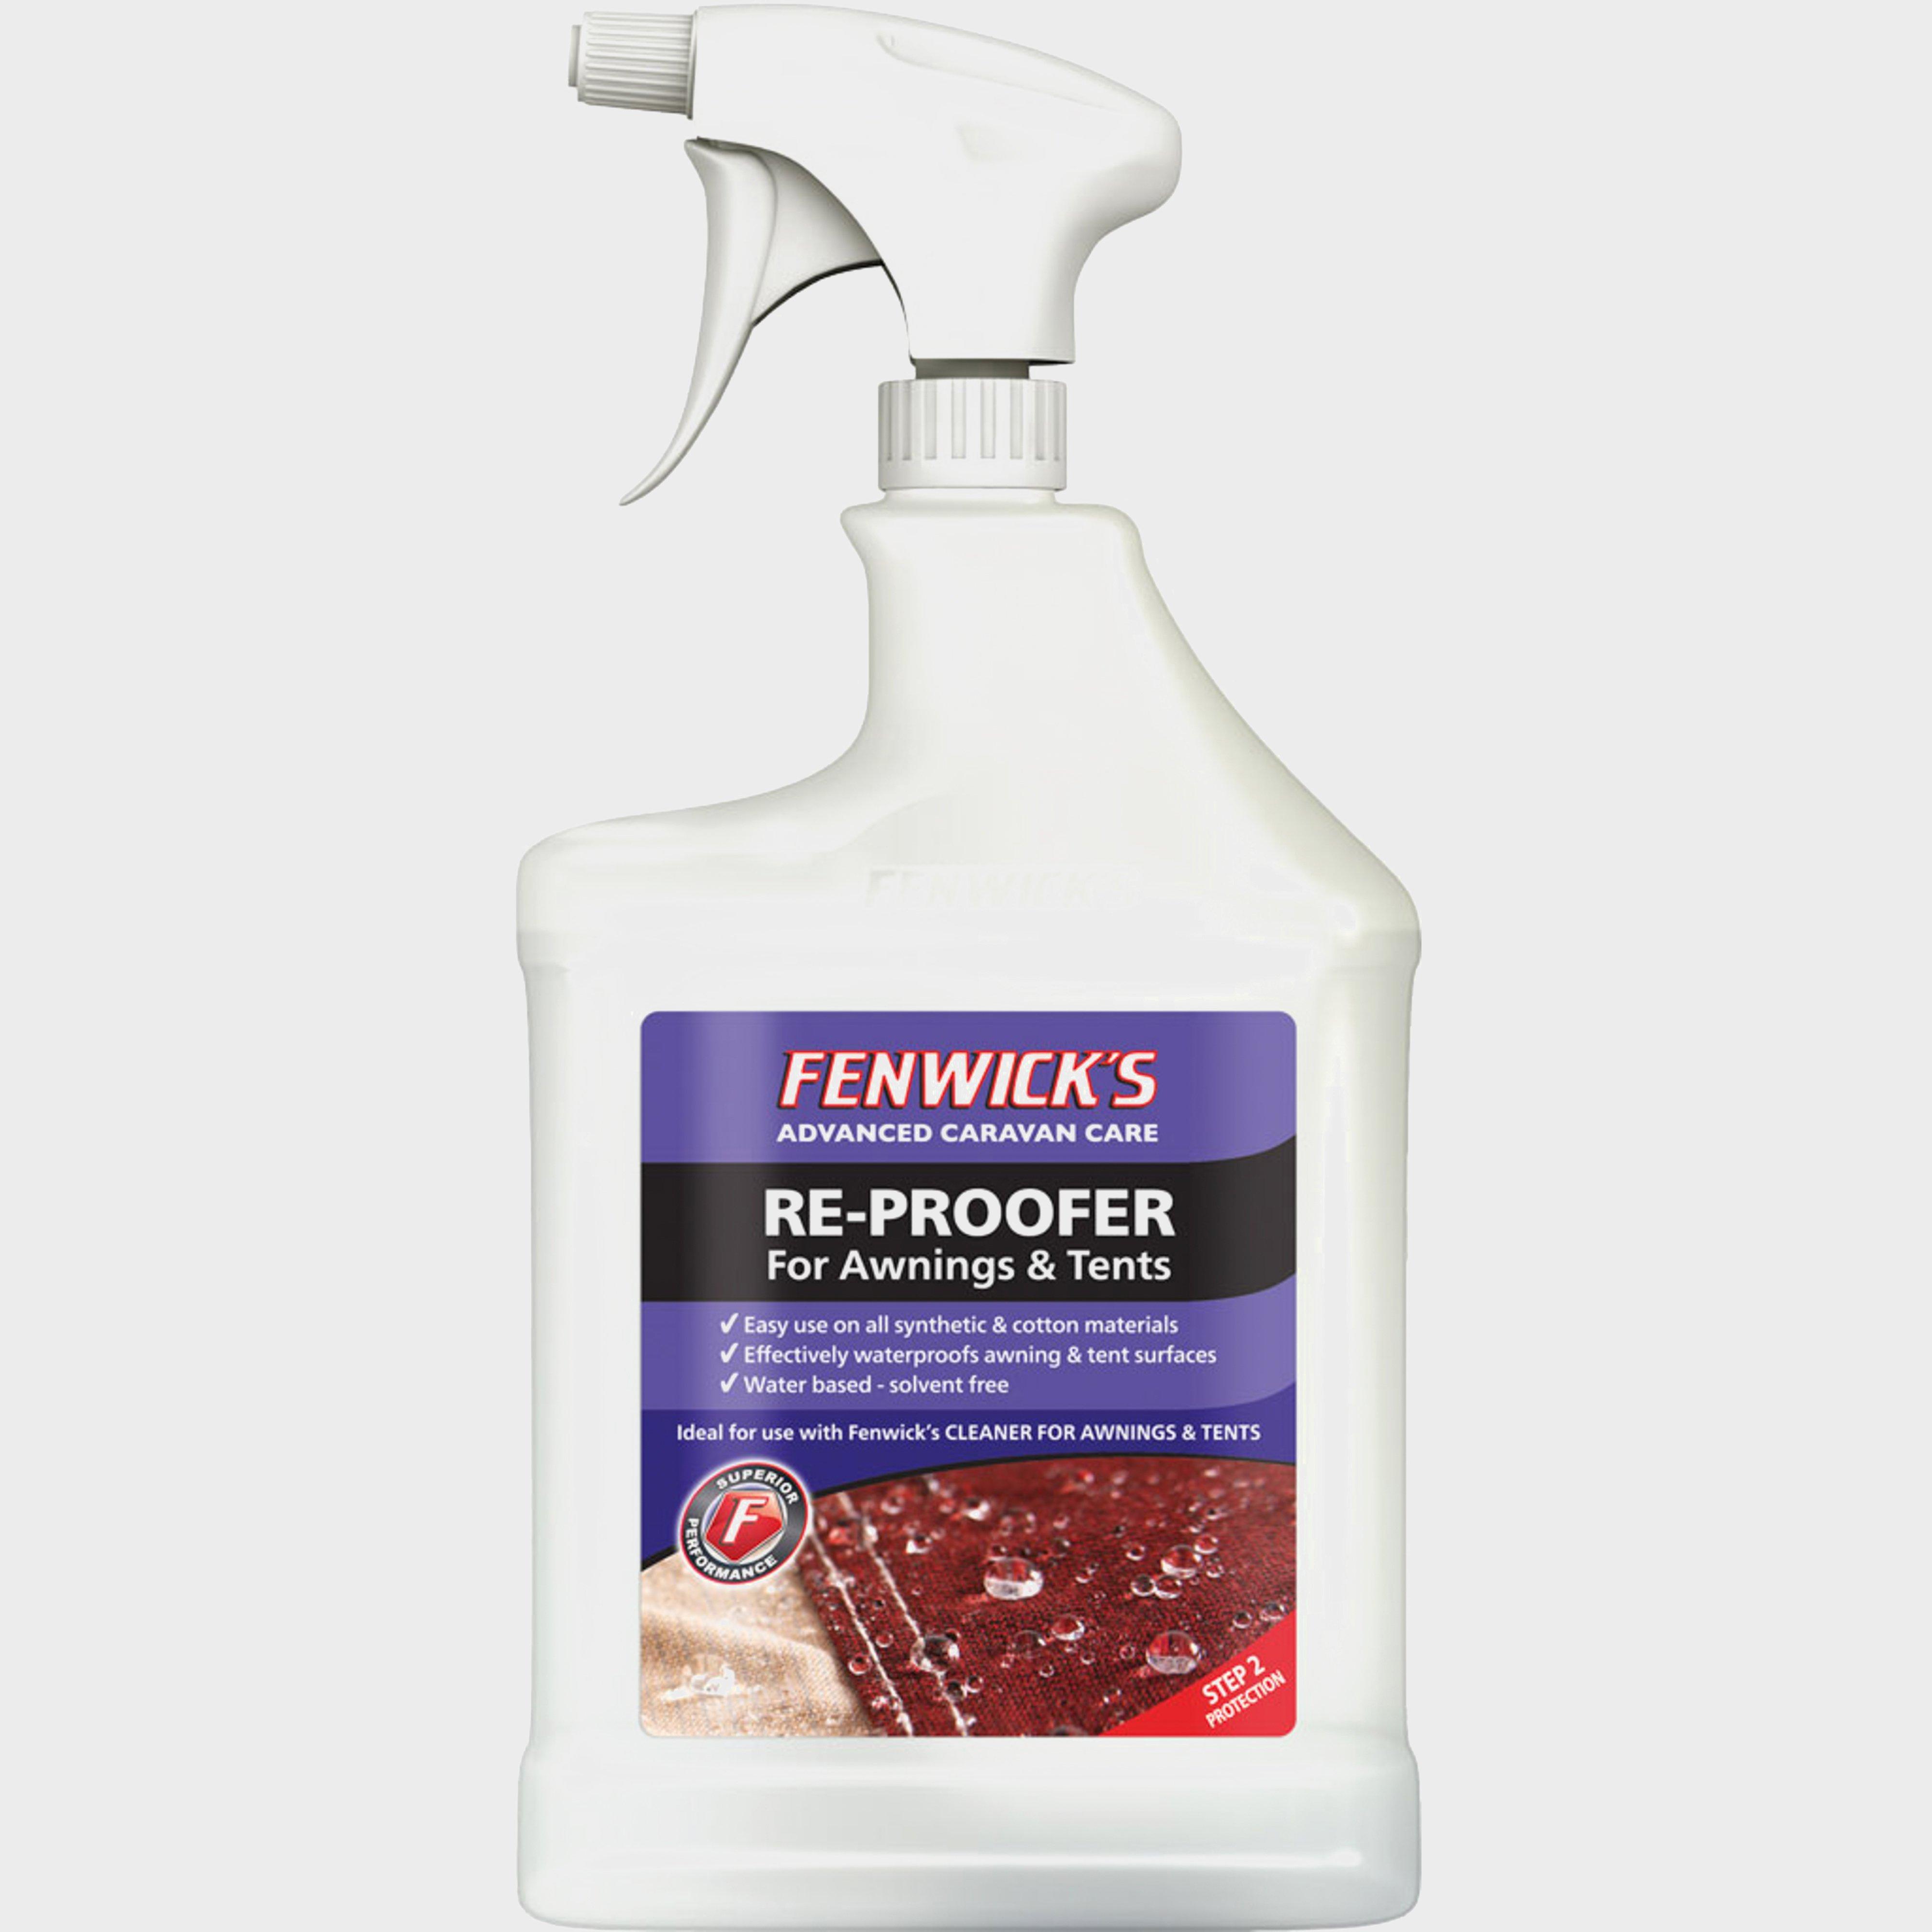 Fenwicks Reproofer For AwningsandTents (1 Litre) - White/reproofer  White/reproofer